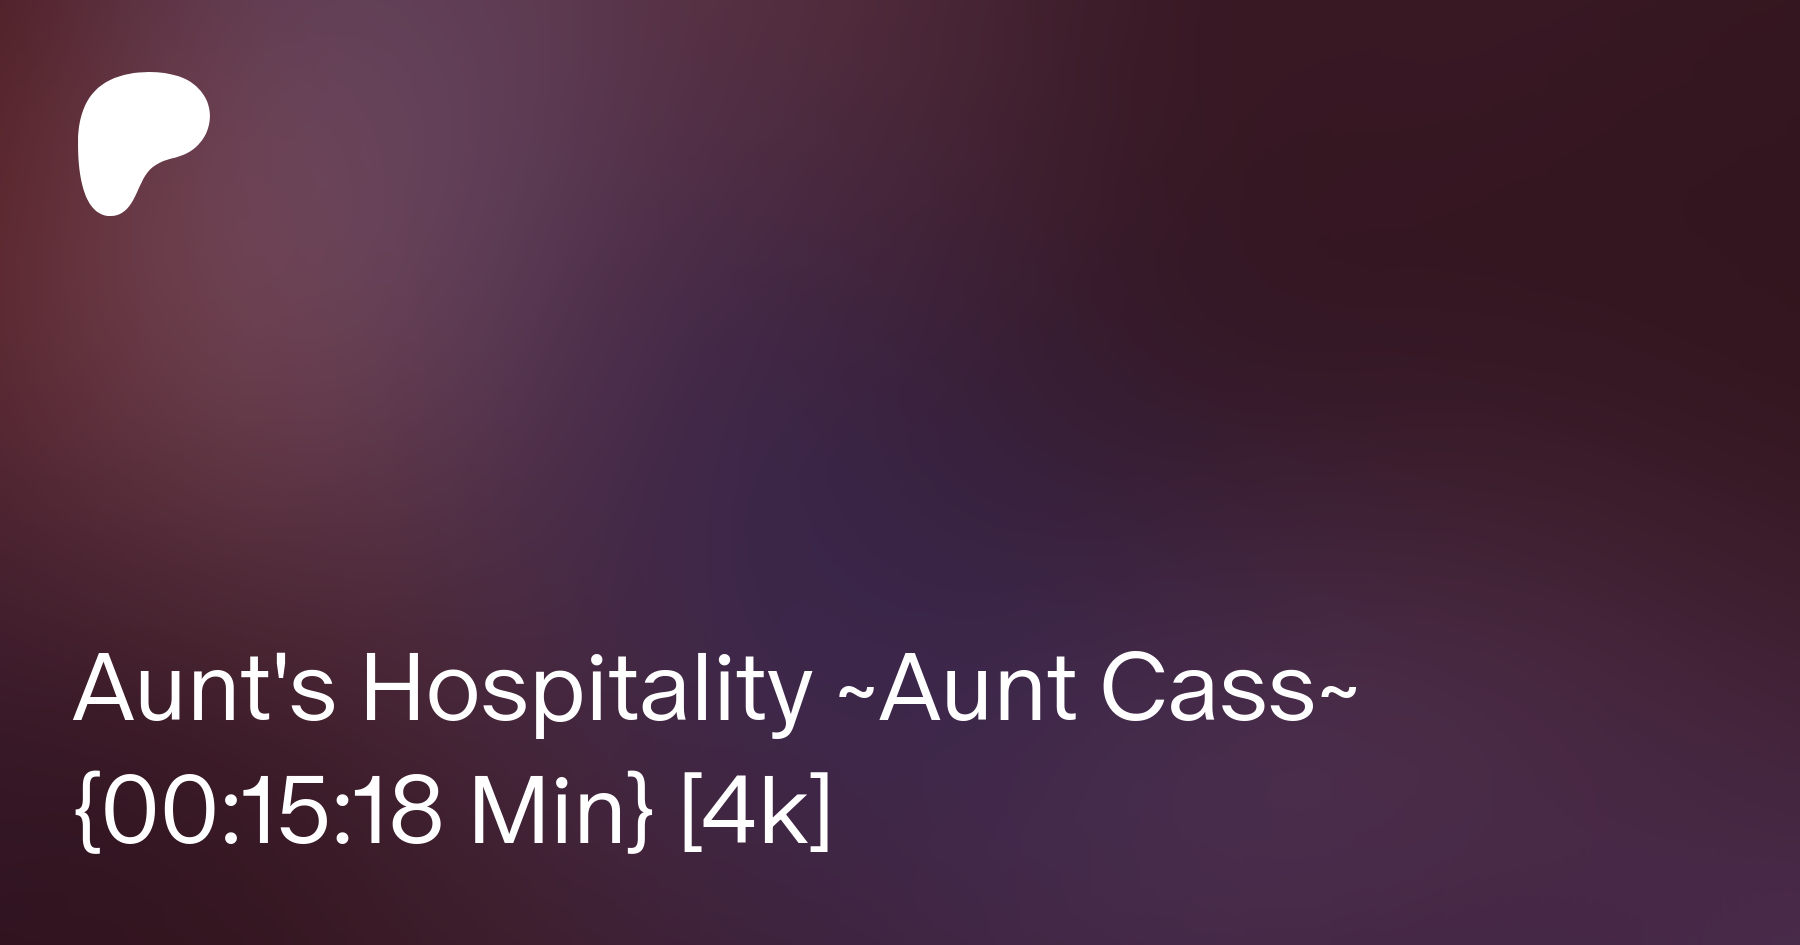 Aunts hospitality